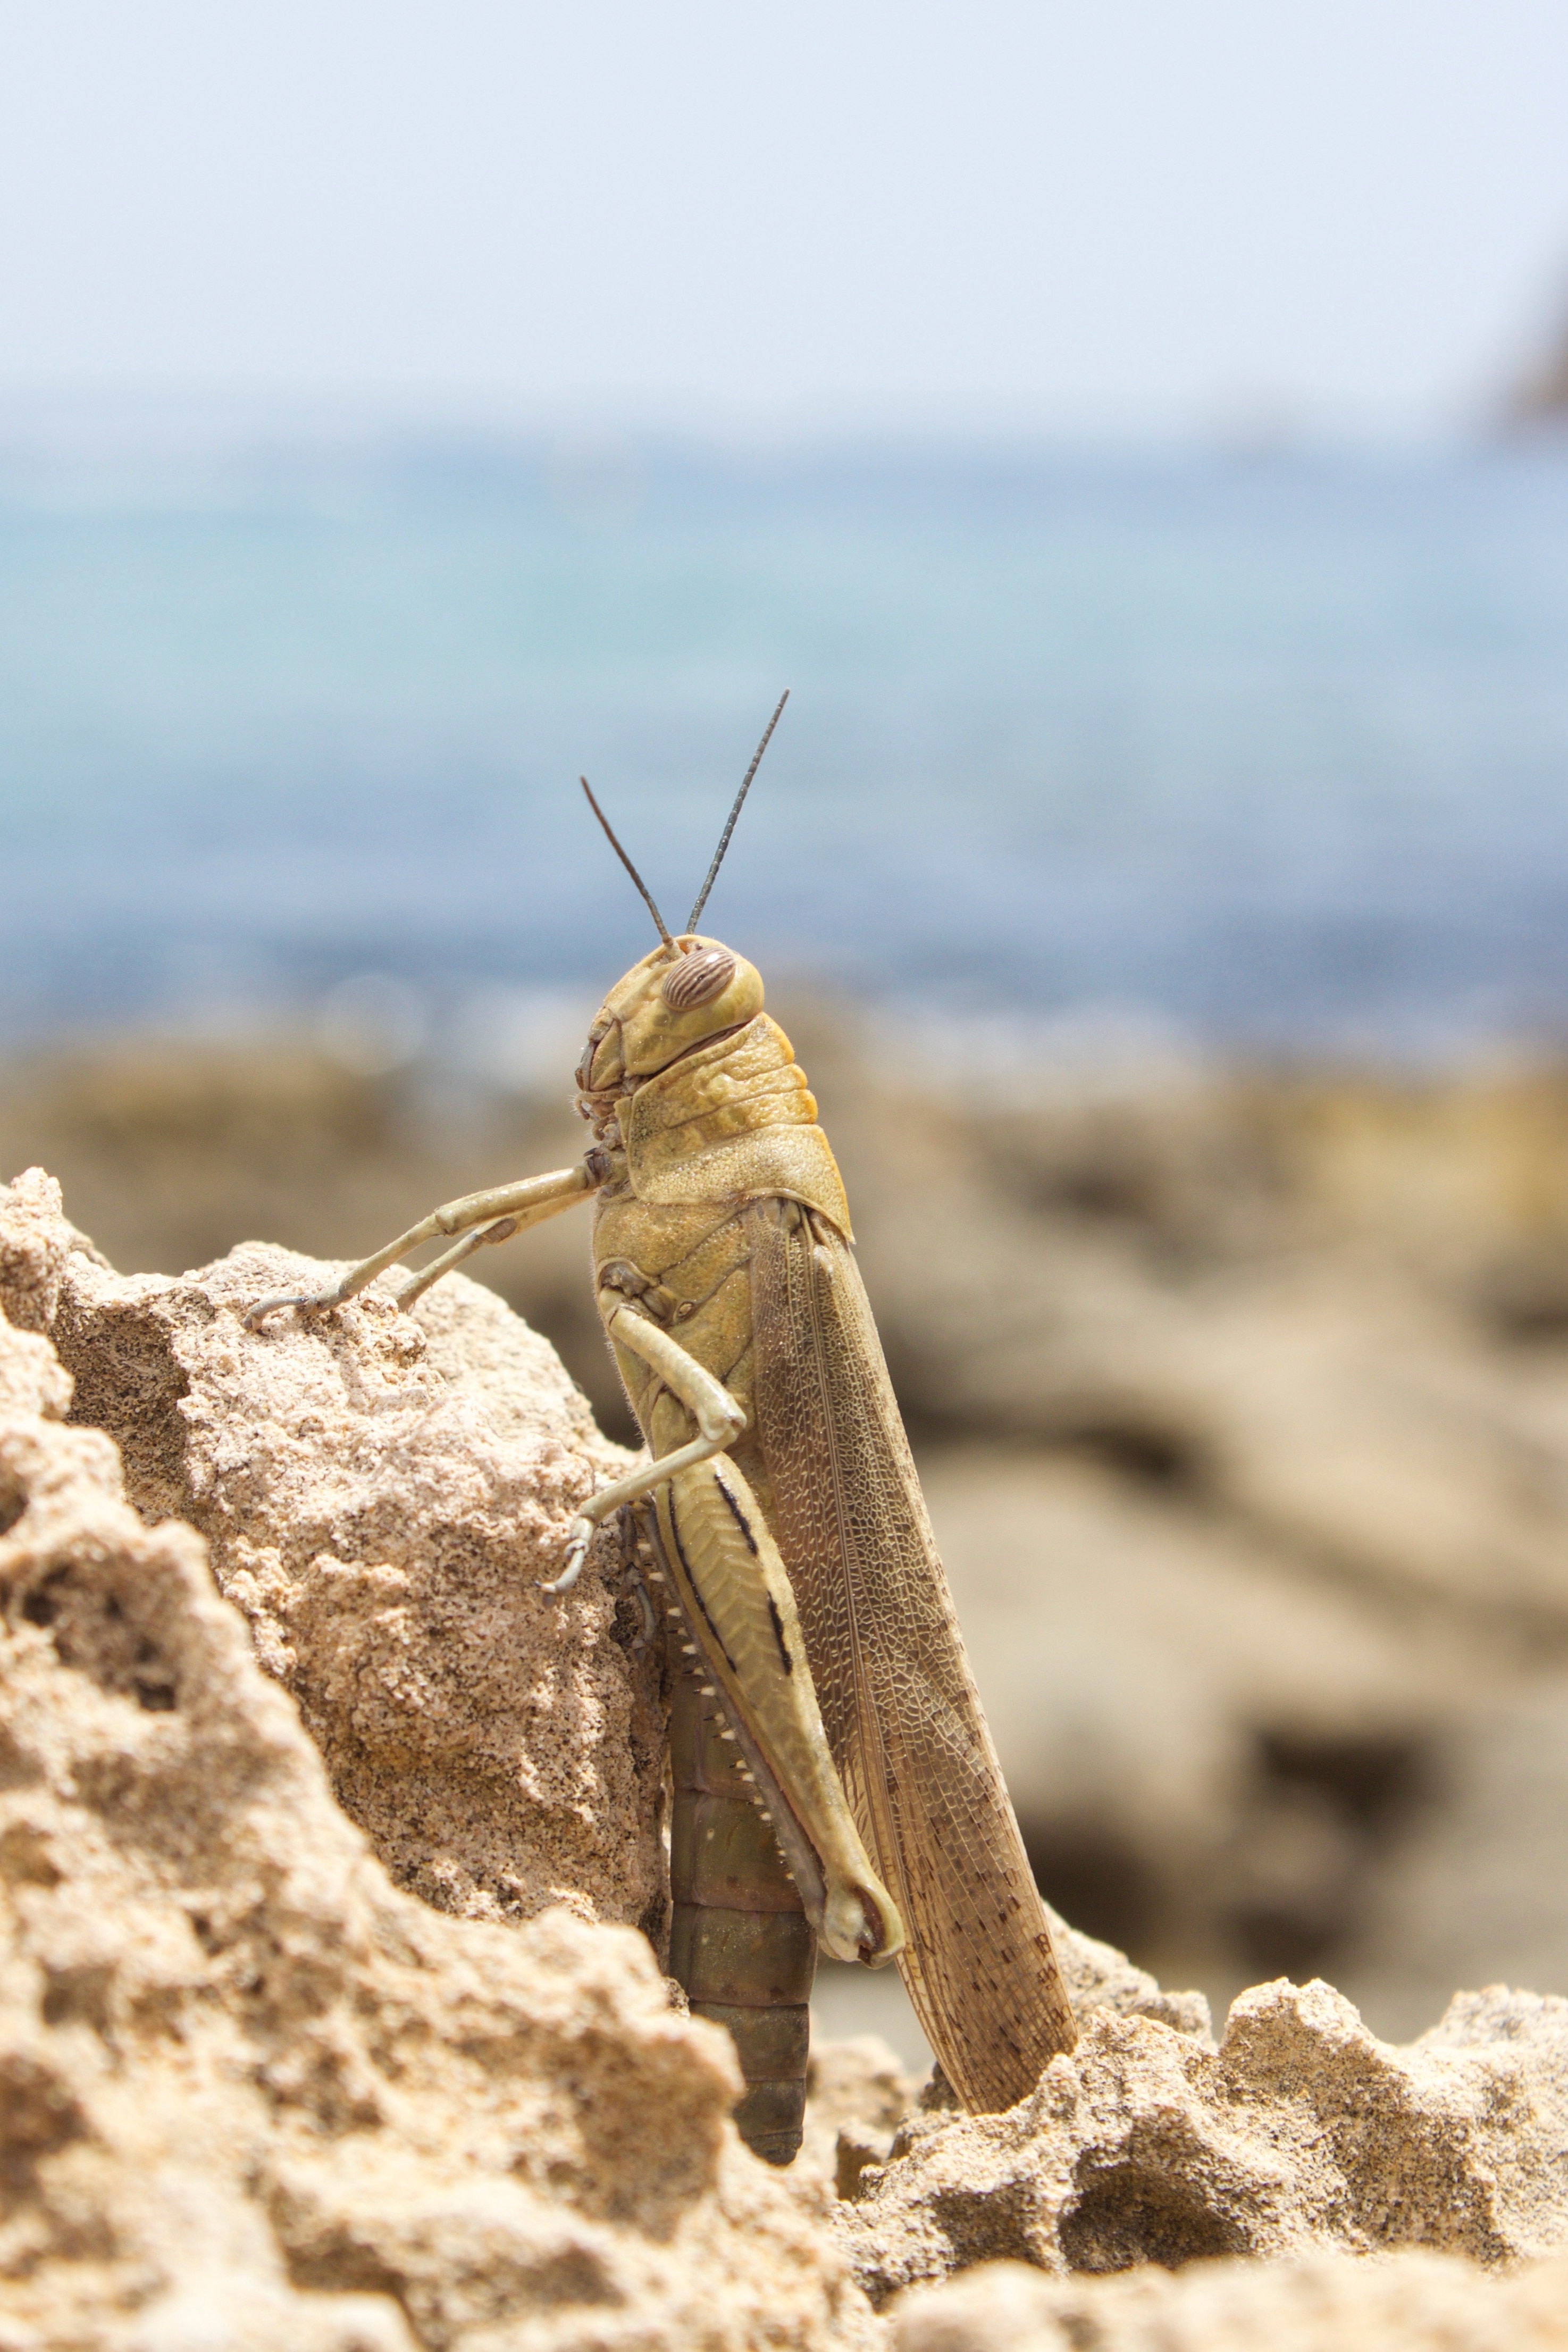 Beach, Insect, Locust, Spain, one animal, animal wildlife